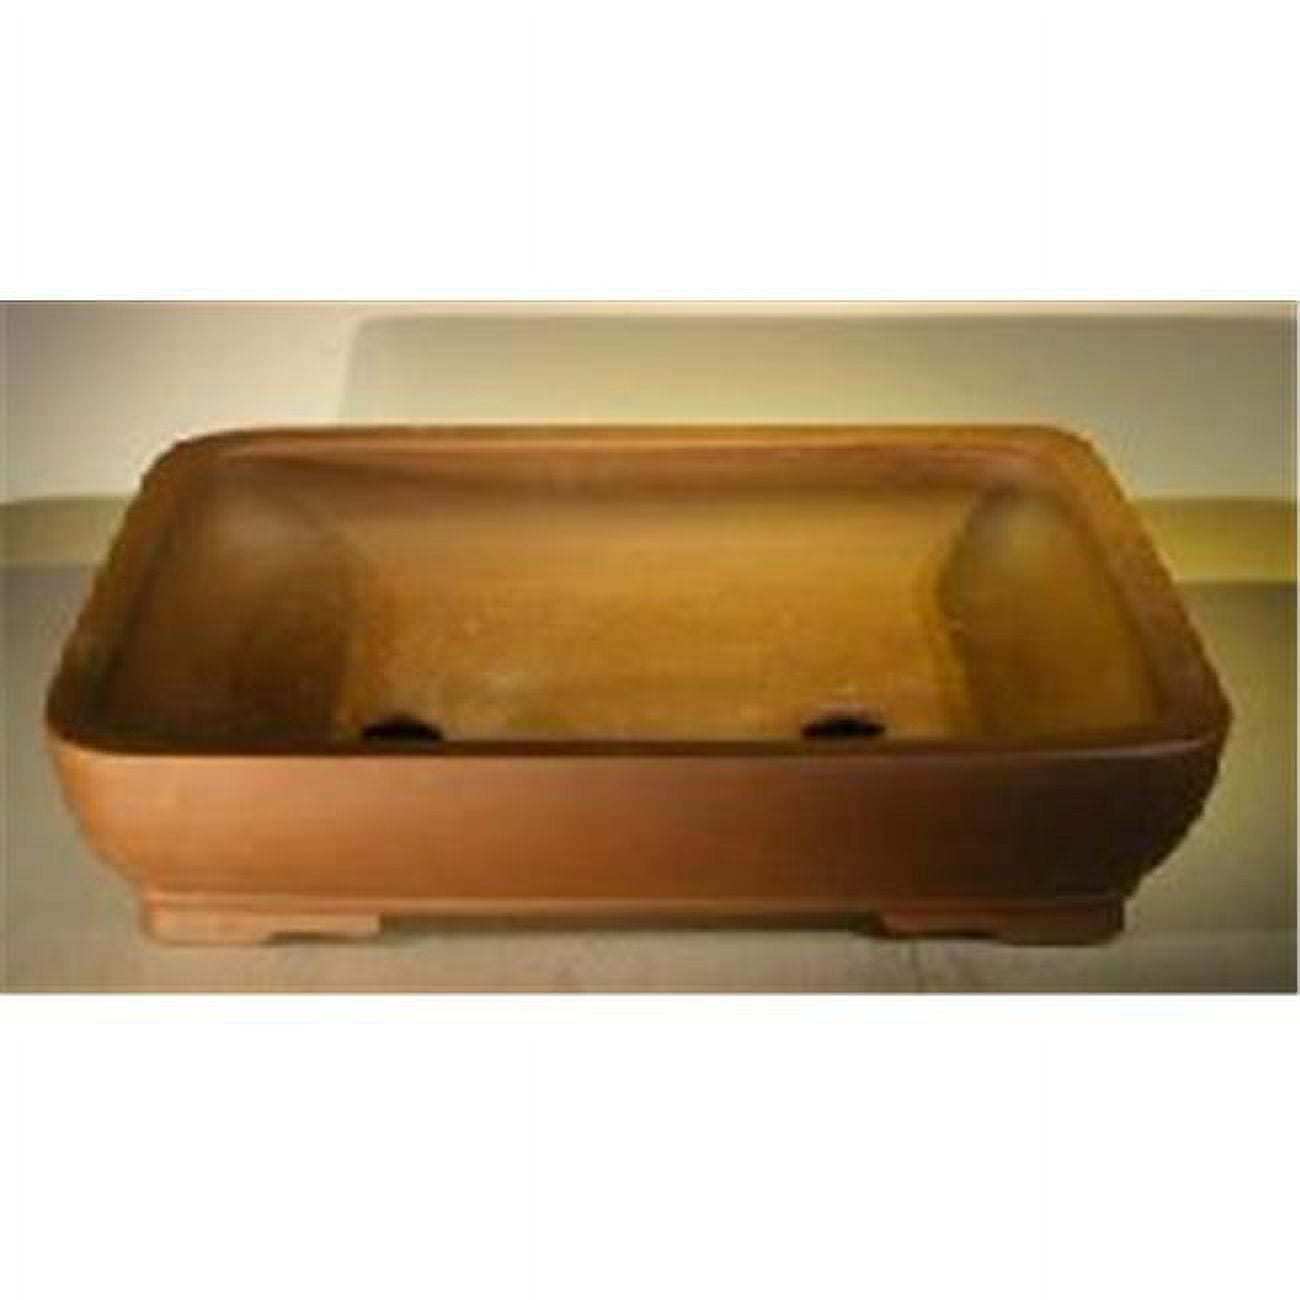 Bonsai Boy L331 16 x 13 x 4 in. Unglazed Ceramic Bonsai Pot, Tan - Rectangle